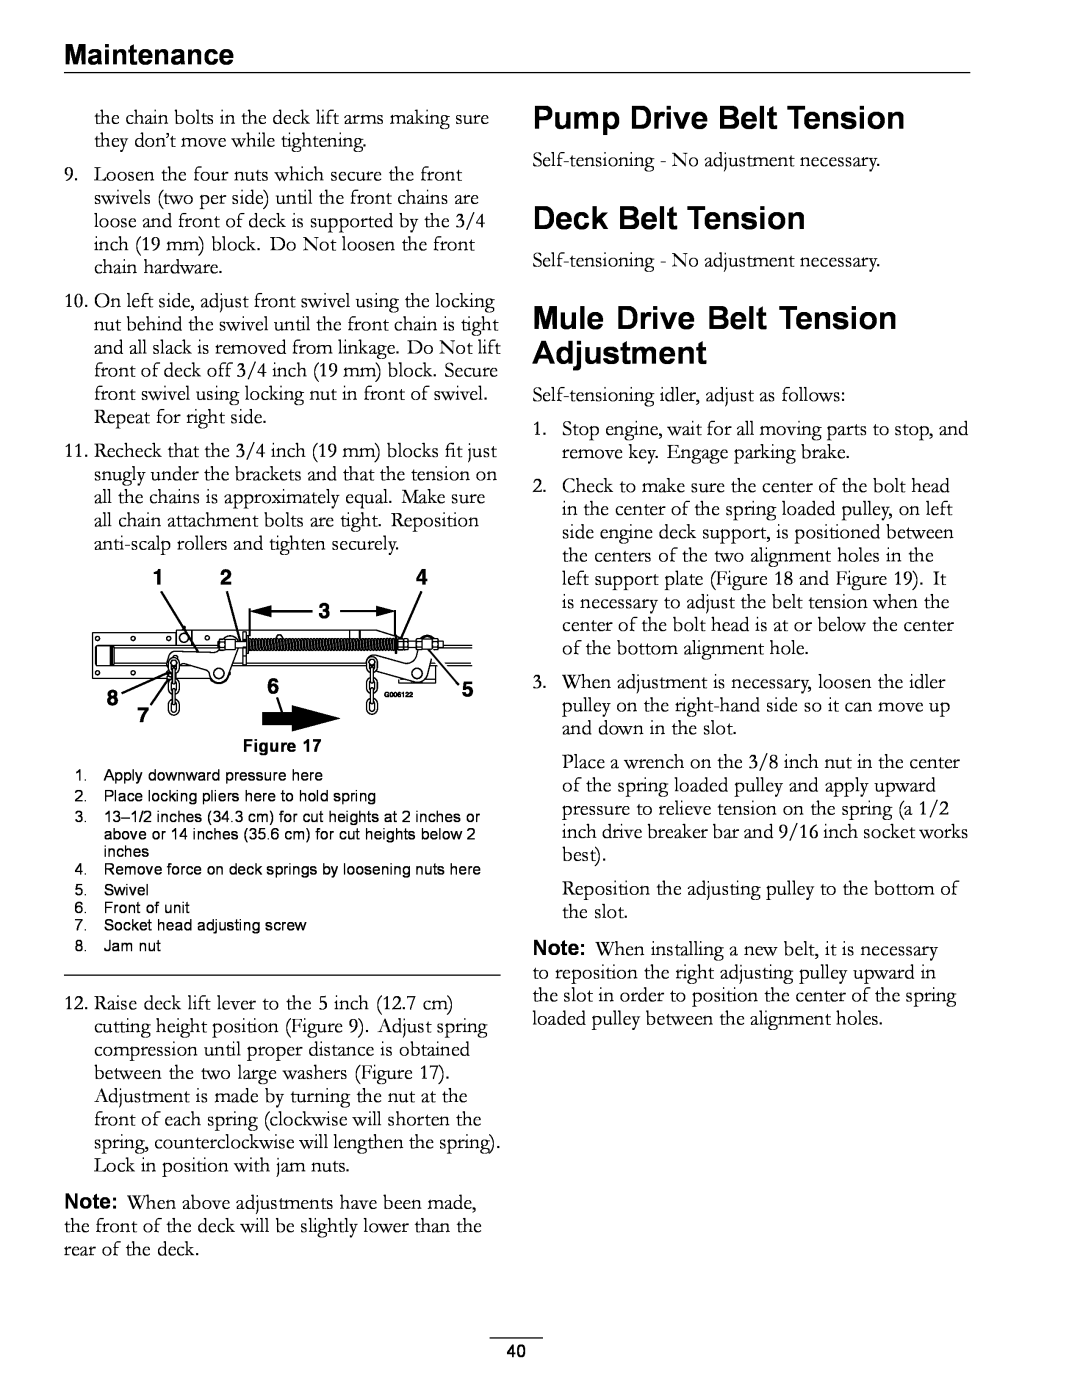 Exmark 000 & higher, 920 manual Pump Drive Belt Tension, Deck Belt Tension, Mule Drive Belt Tension Adjustment, Maintenance 